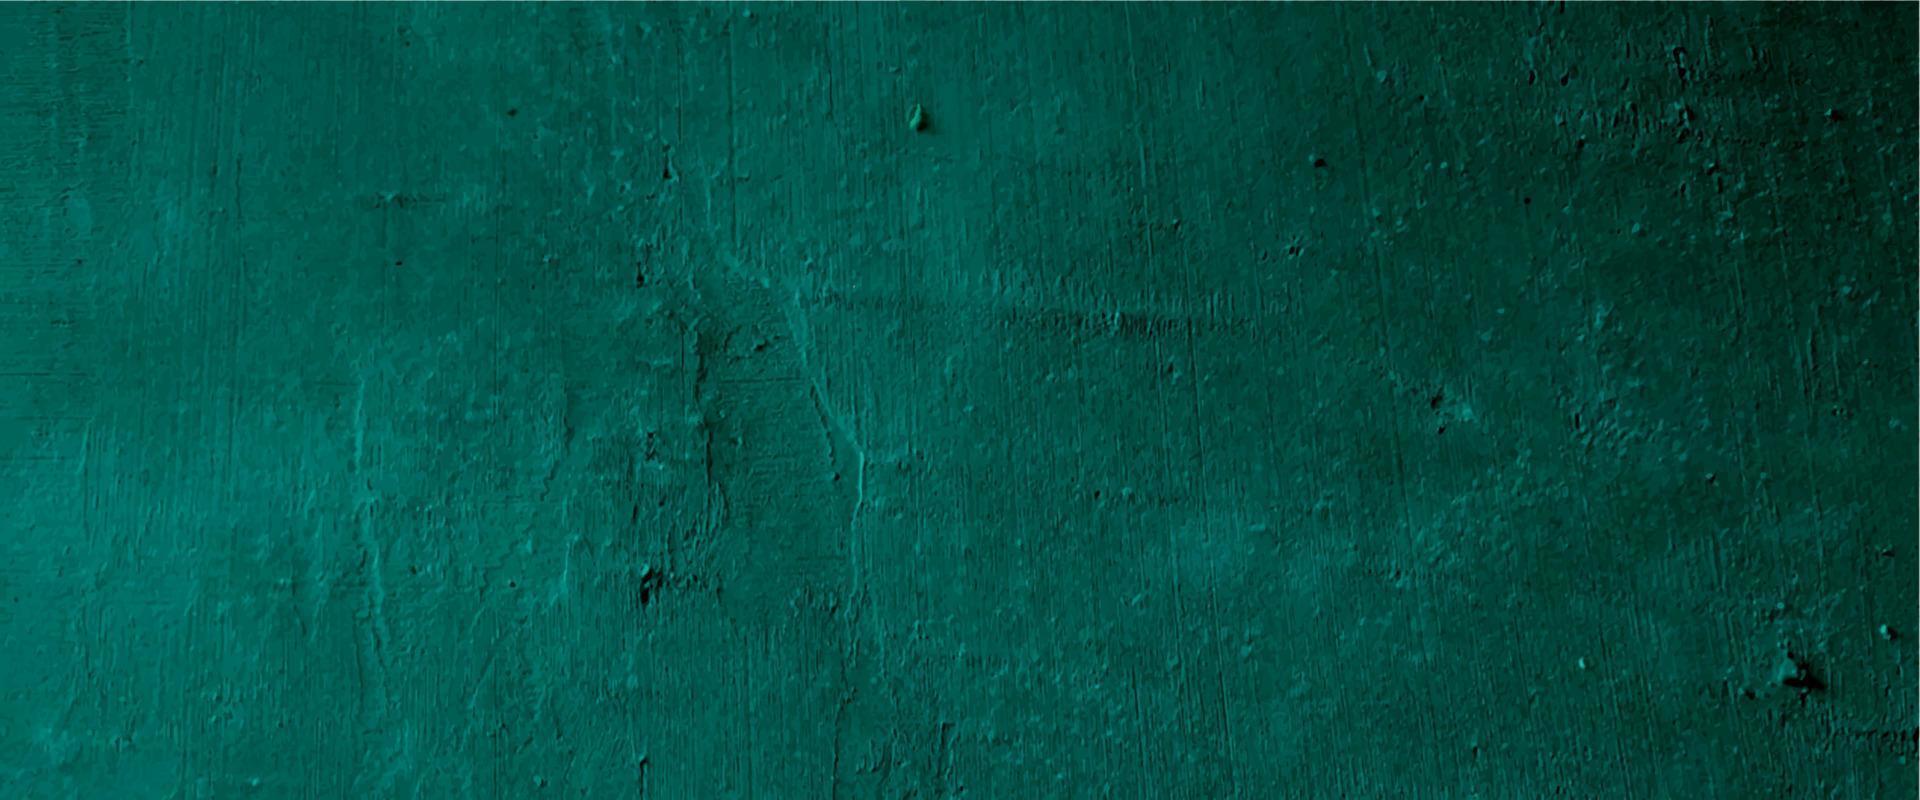 abstracte groene grunge textuur achtergrond vector